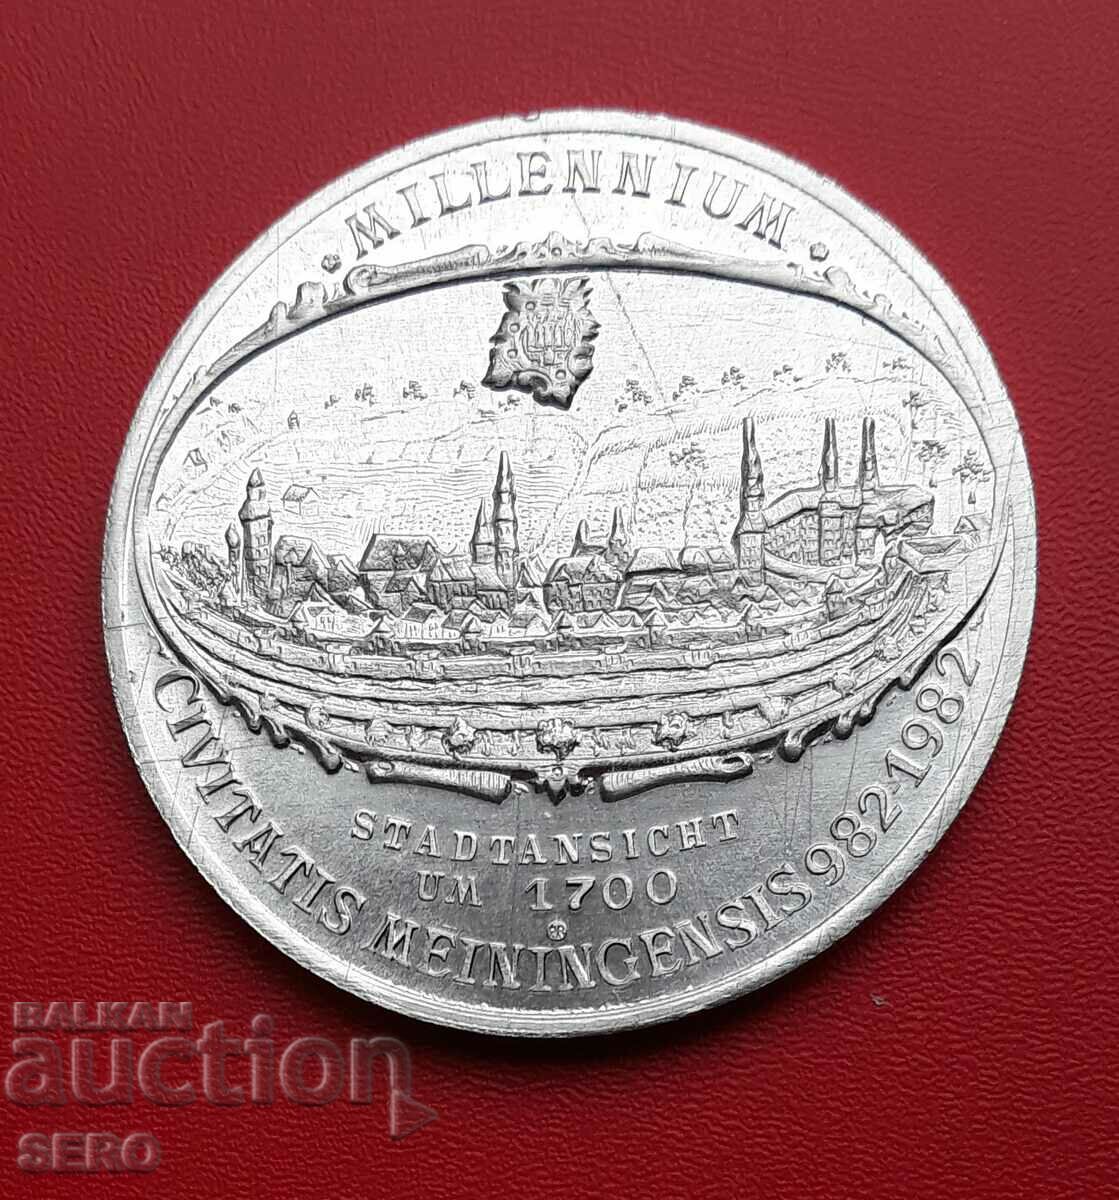 Germany-medal 1982-1000 years city of Meiningen